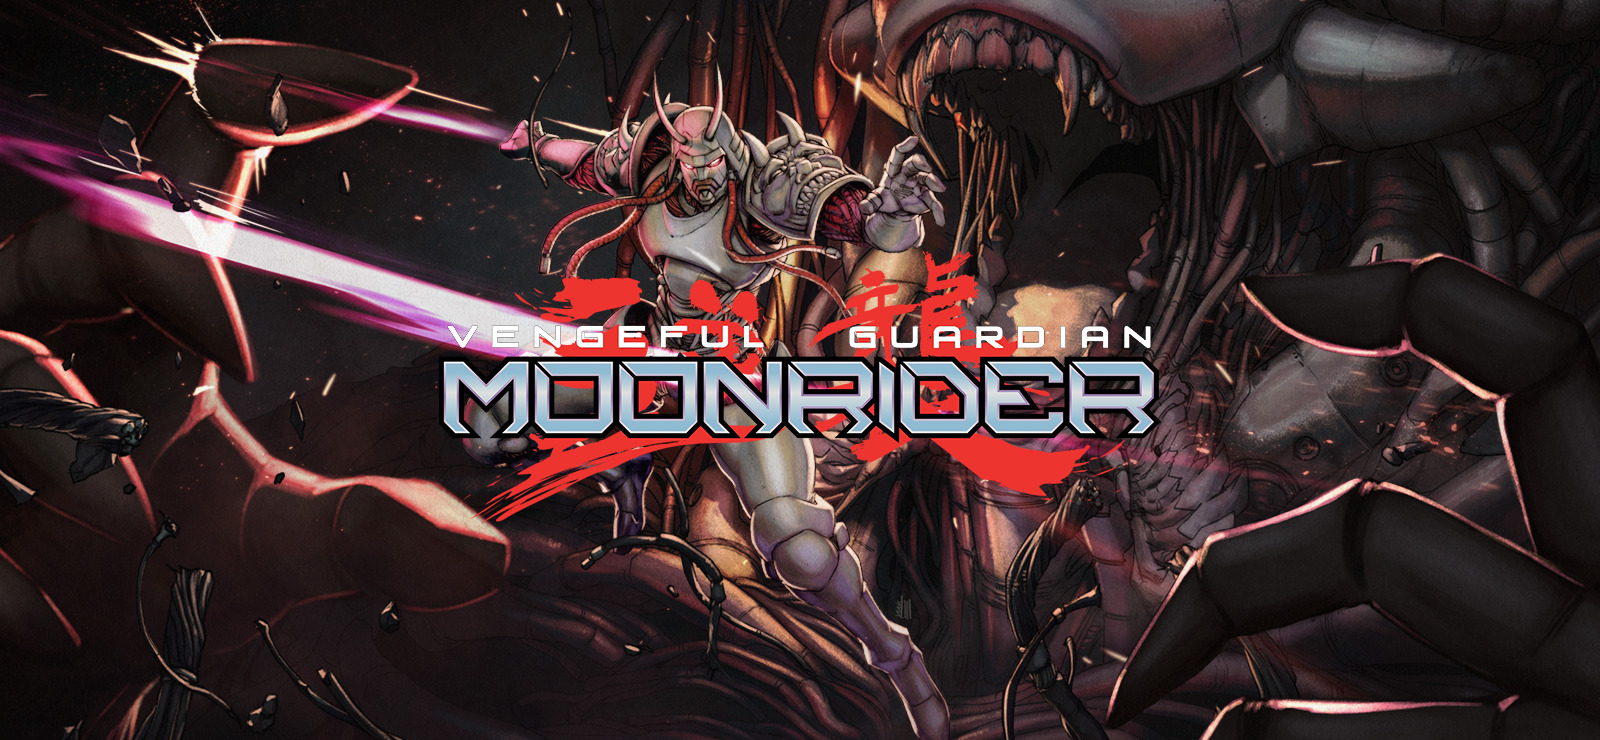 Vengeful Guardian: Moonrider Review